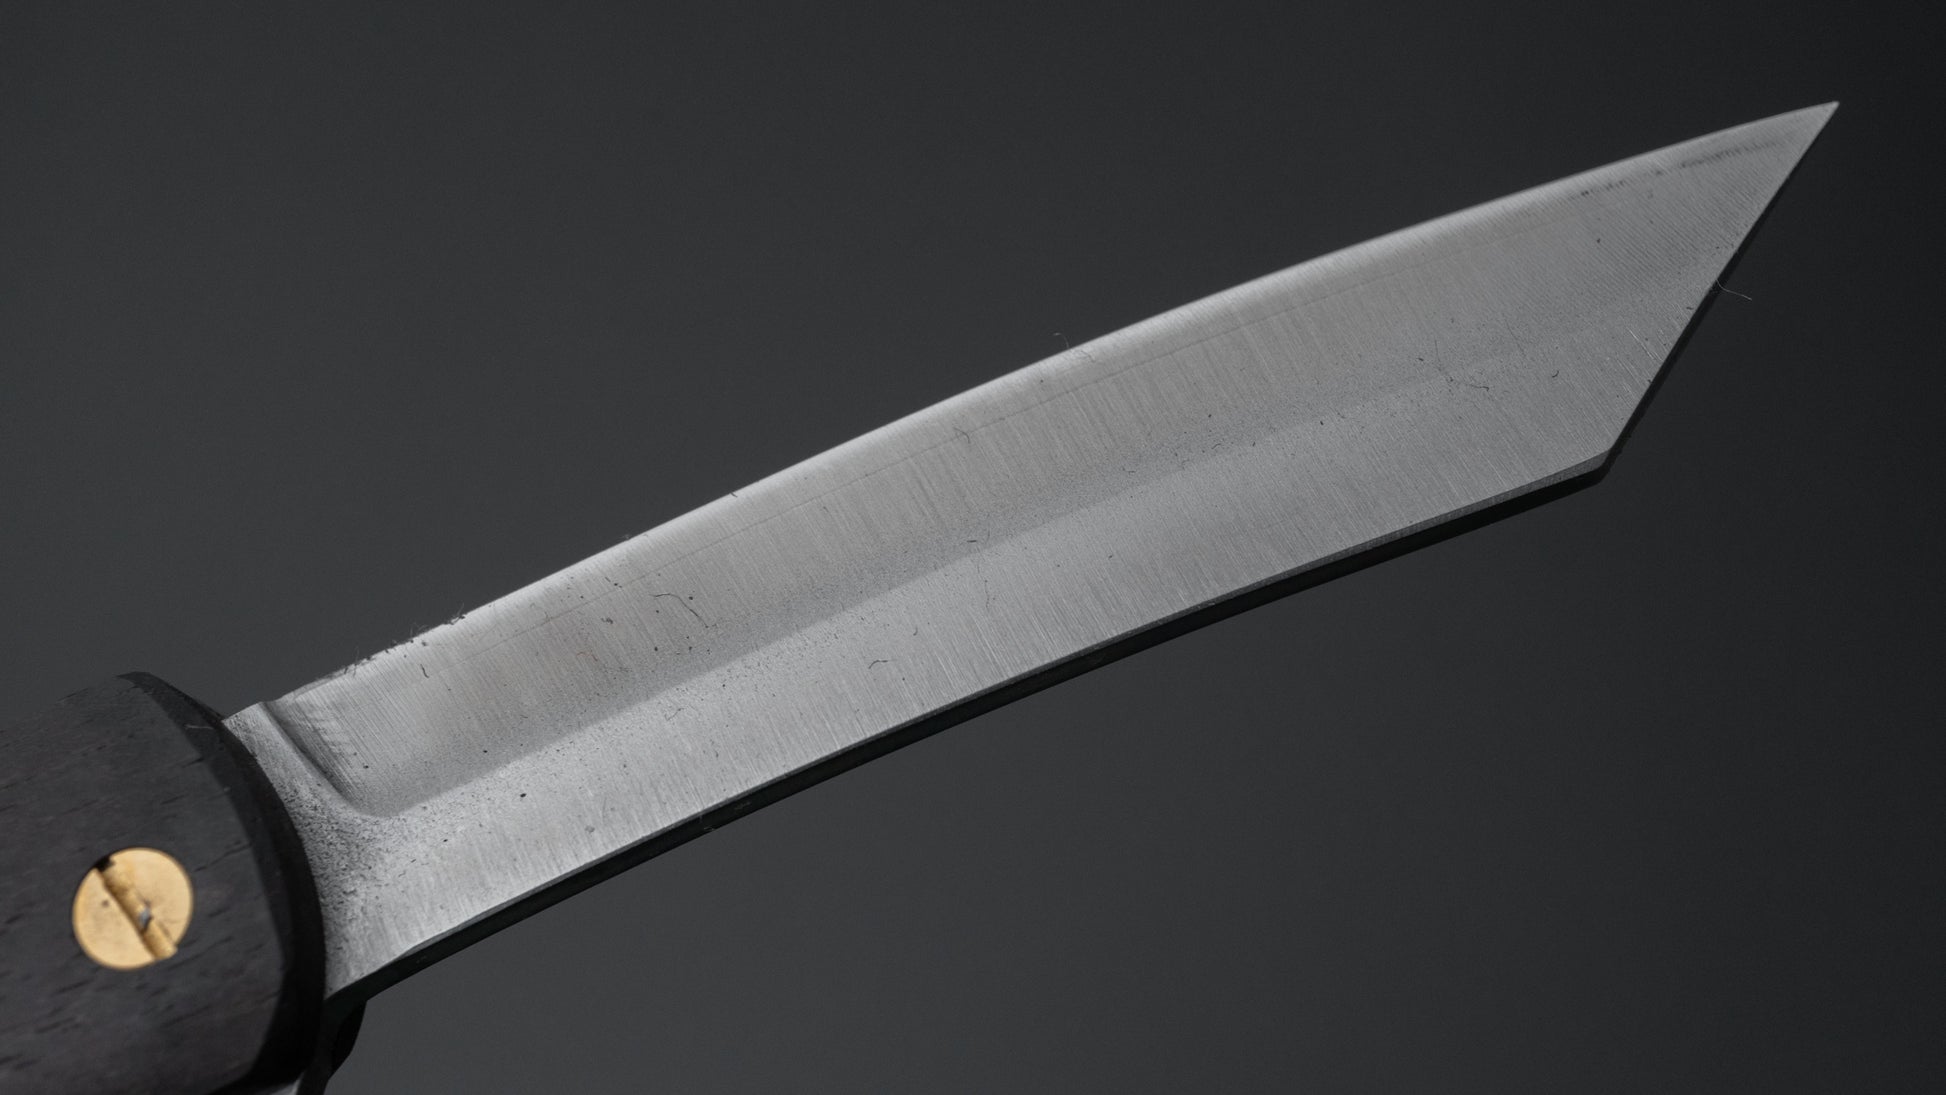 Higonokami VG10 Folding Knife Kurokaki Persimmon Handle - HITOHIRA